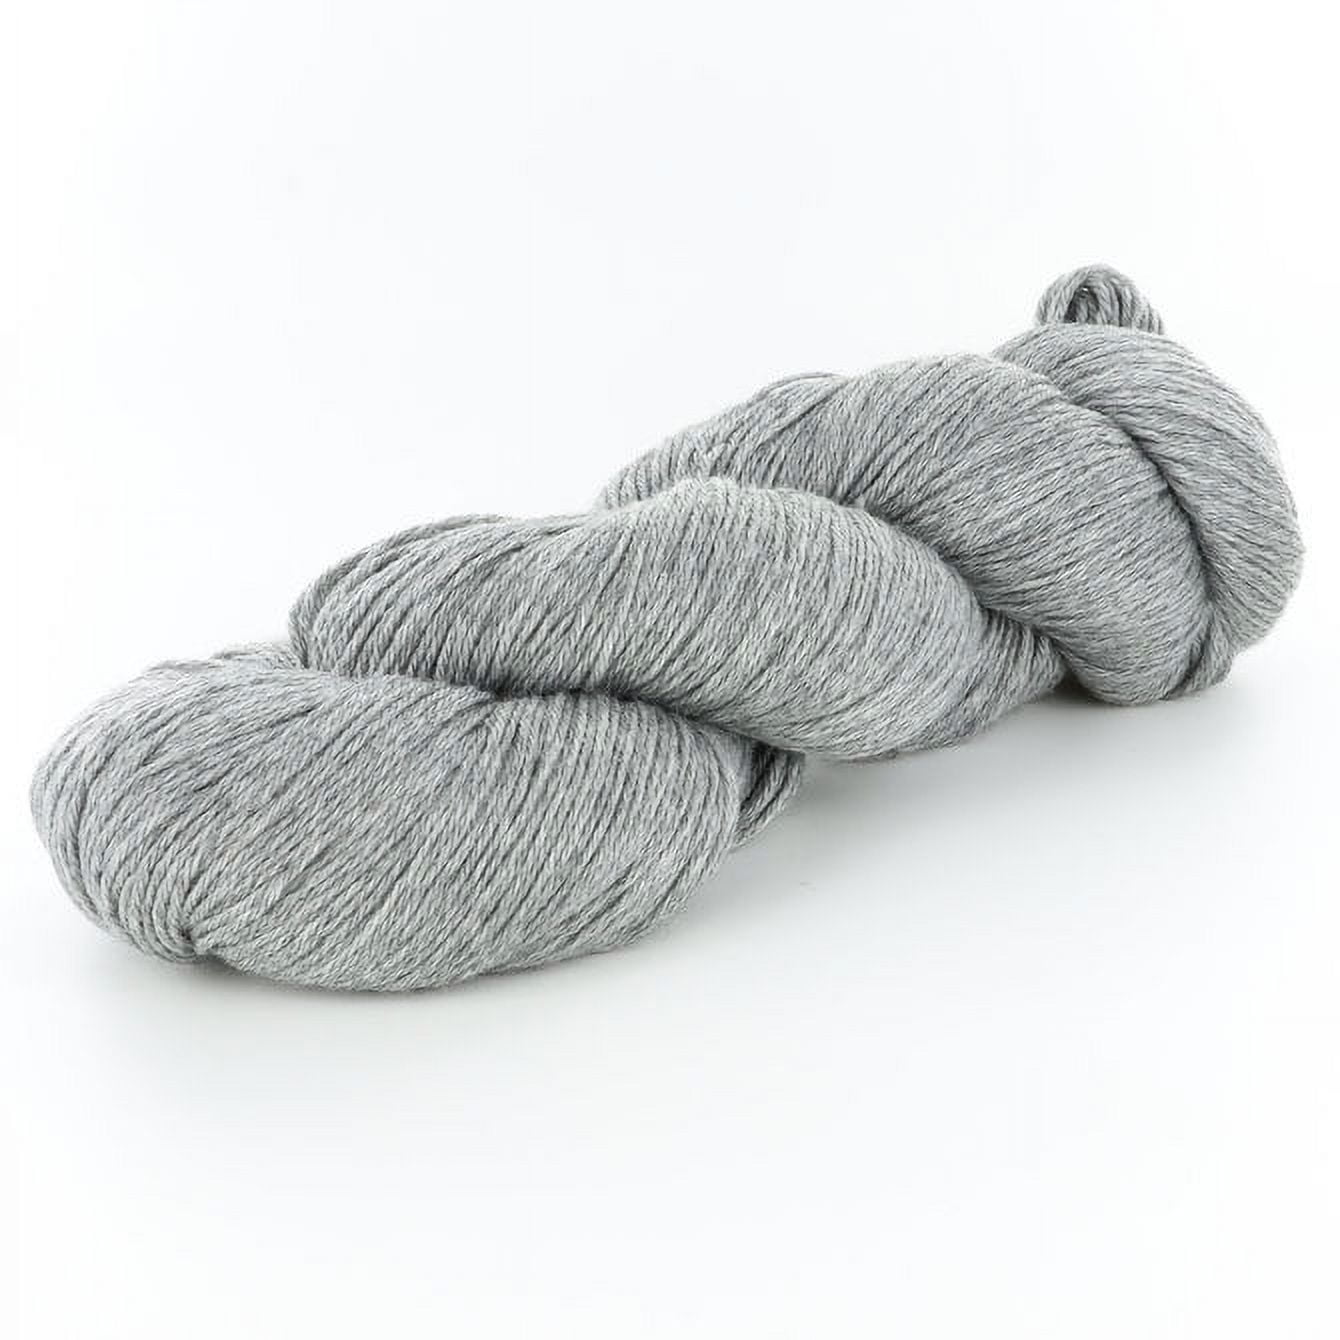 Black and Gray Light Fingering Weight Sock Yarn